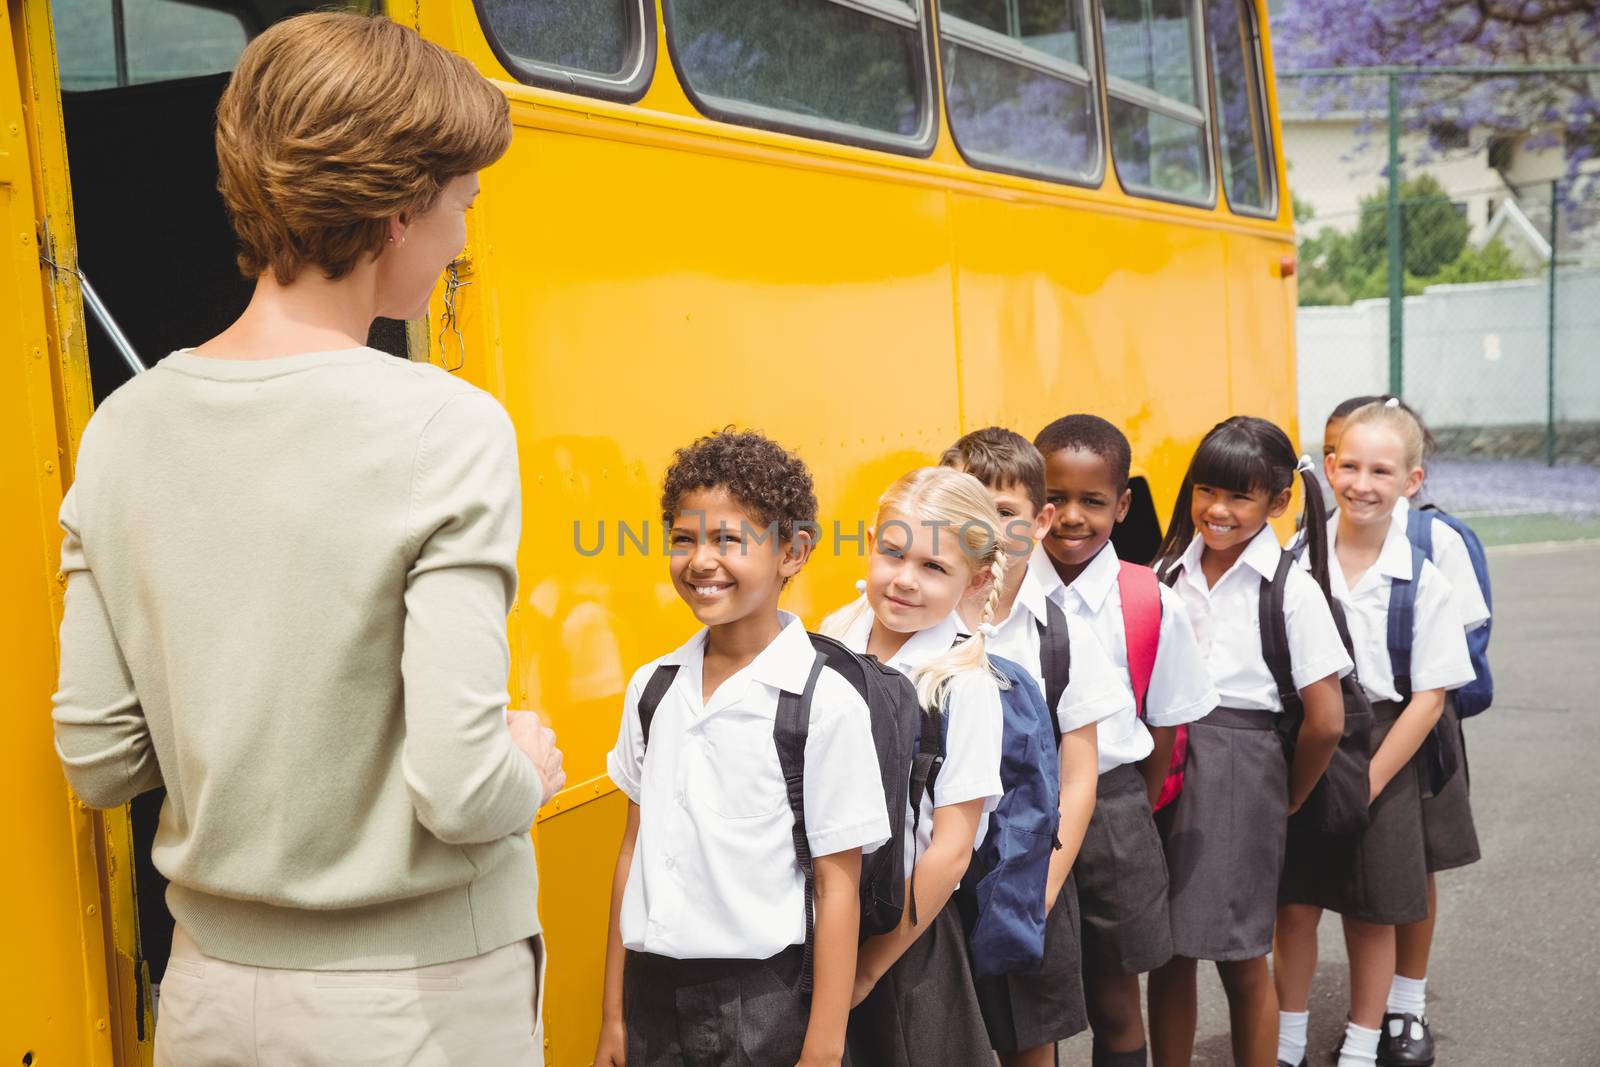 Cute schoolchildren waiting to get on school bus by Wavebreakmedia